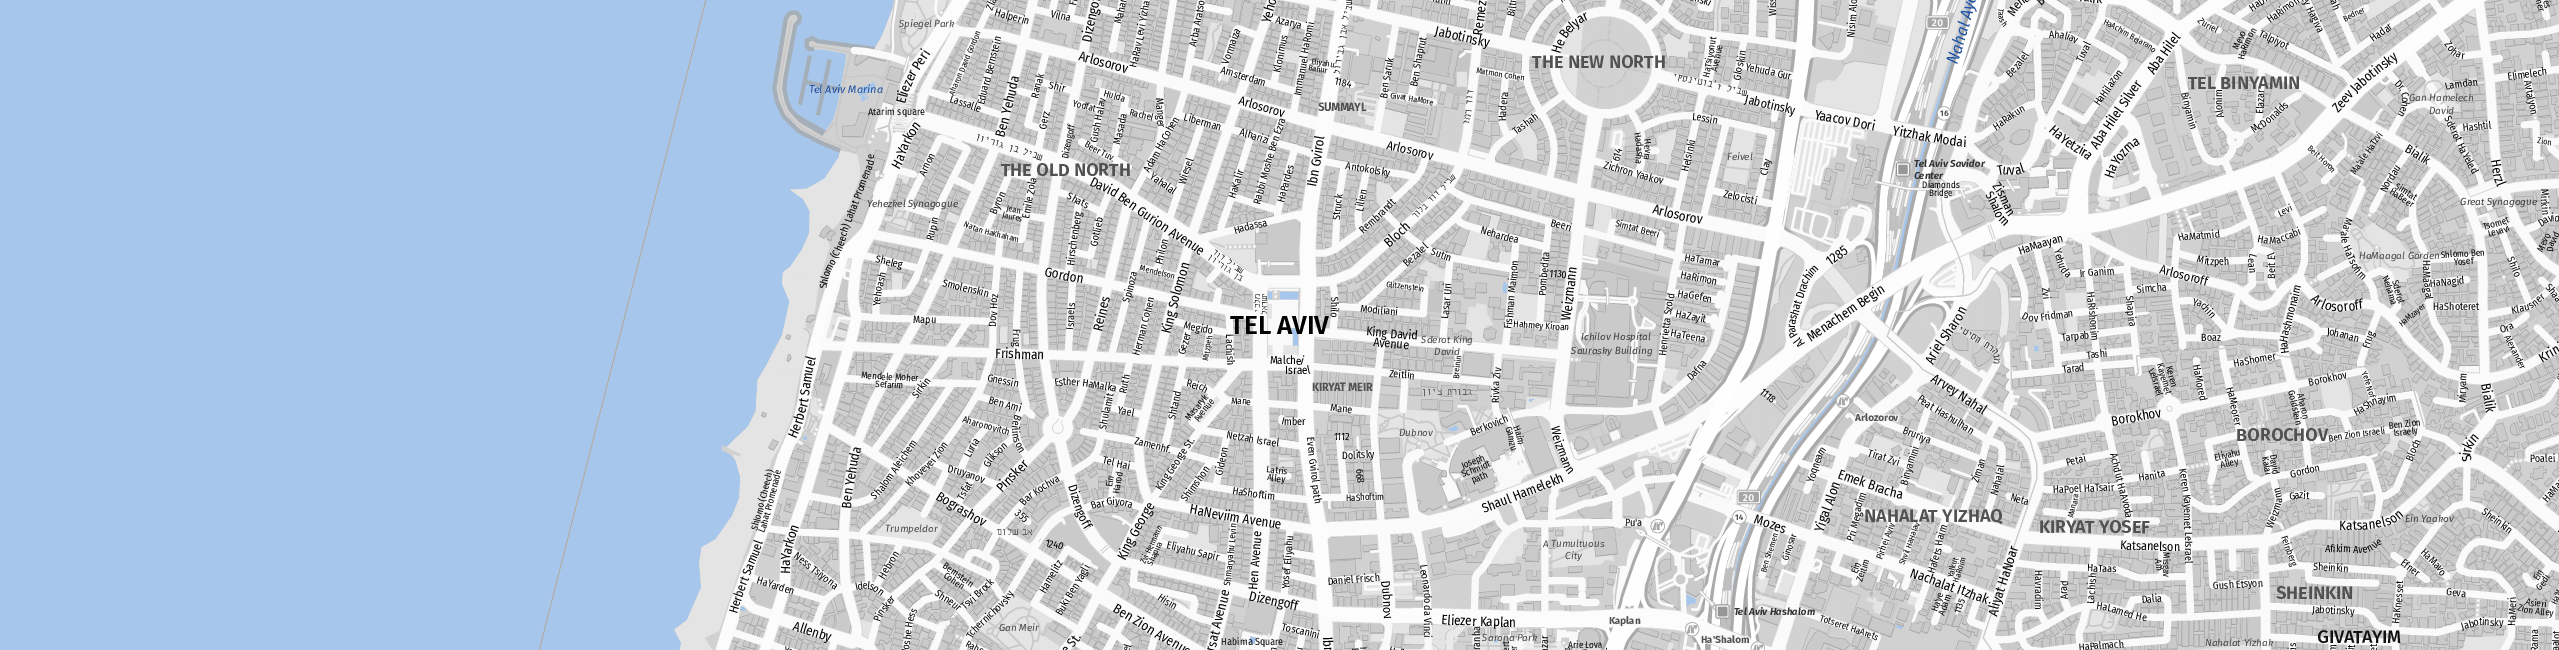 Stadtplan Tel Aviv-Yafo zum Downloaden.